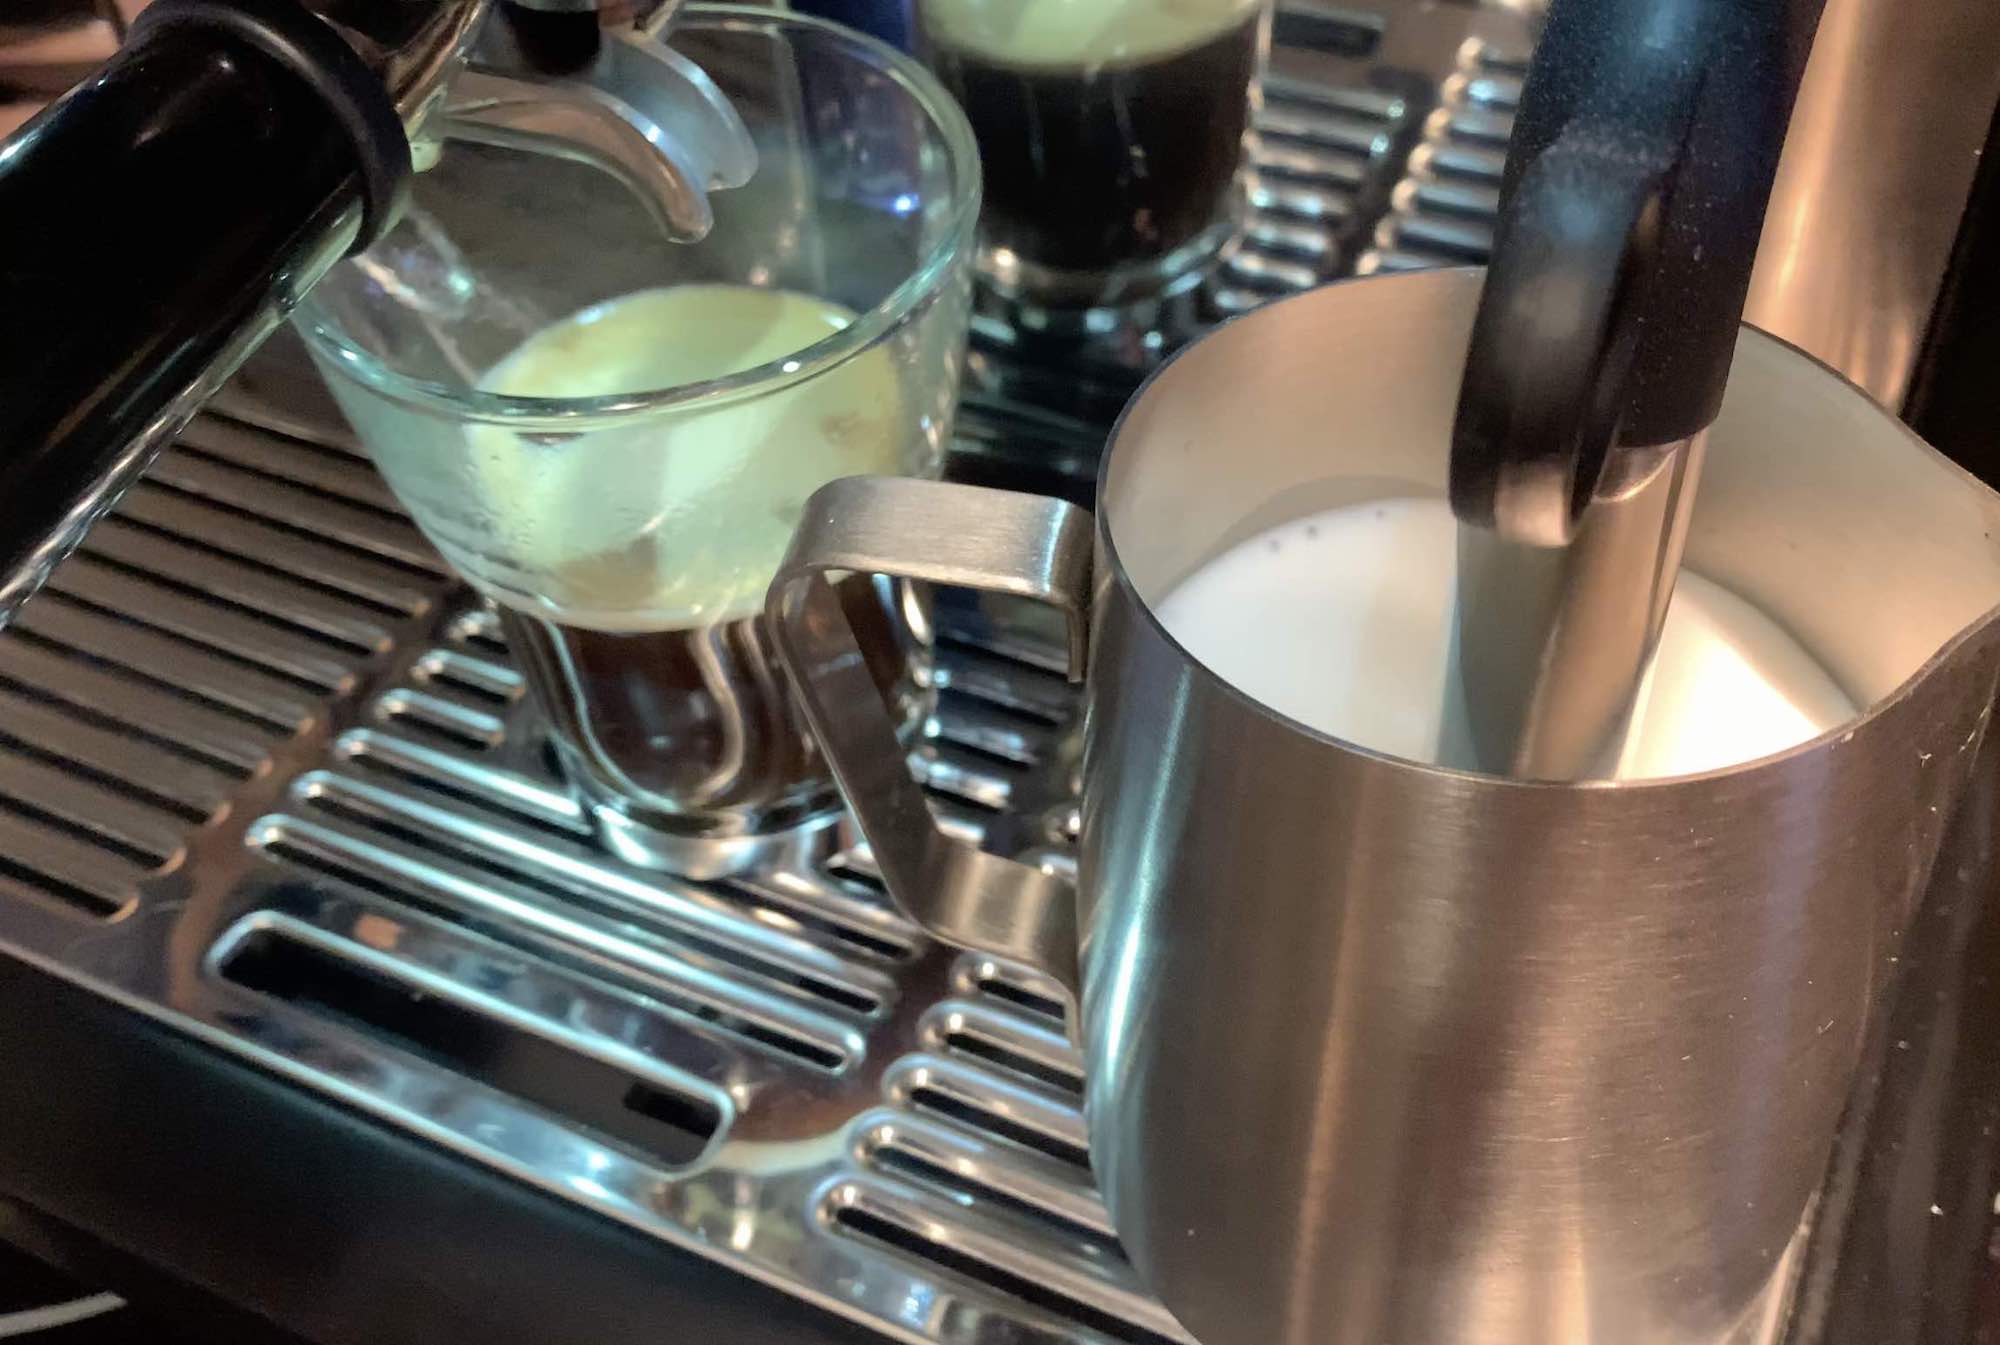 Milk froth Breville espresso